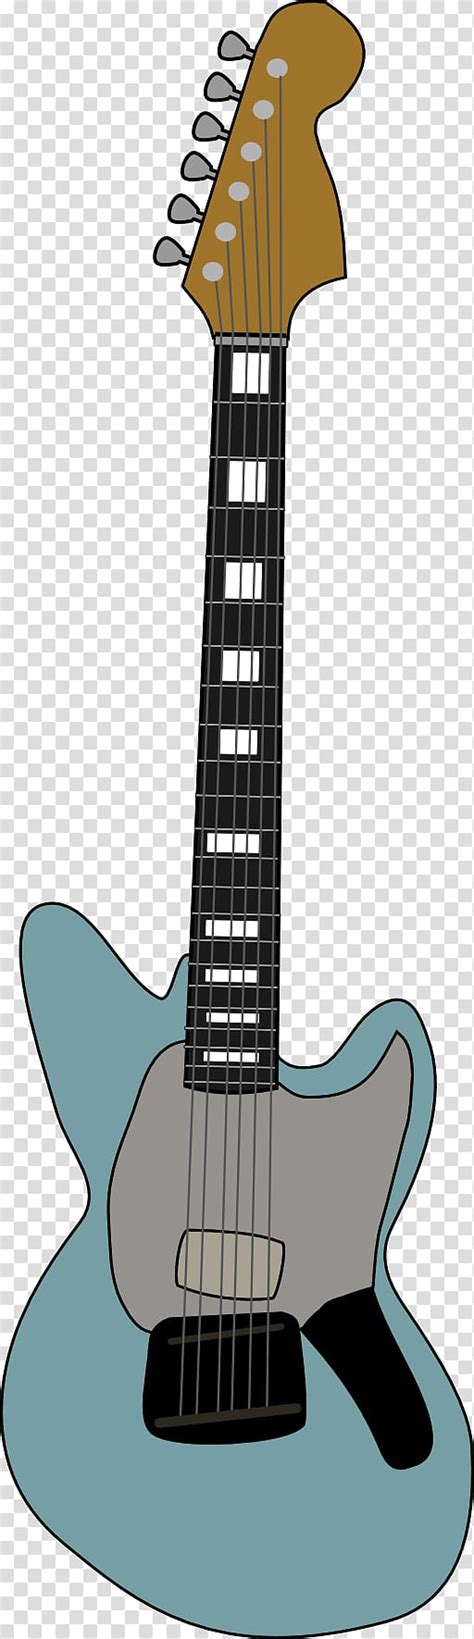 Fender Jag Stang Fender Precision Bass Fender Stratocaster Fender Jaguar Fender Jazzmaster